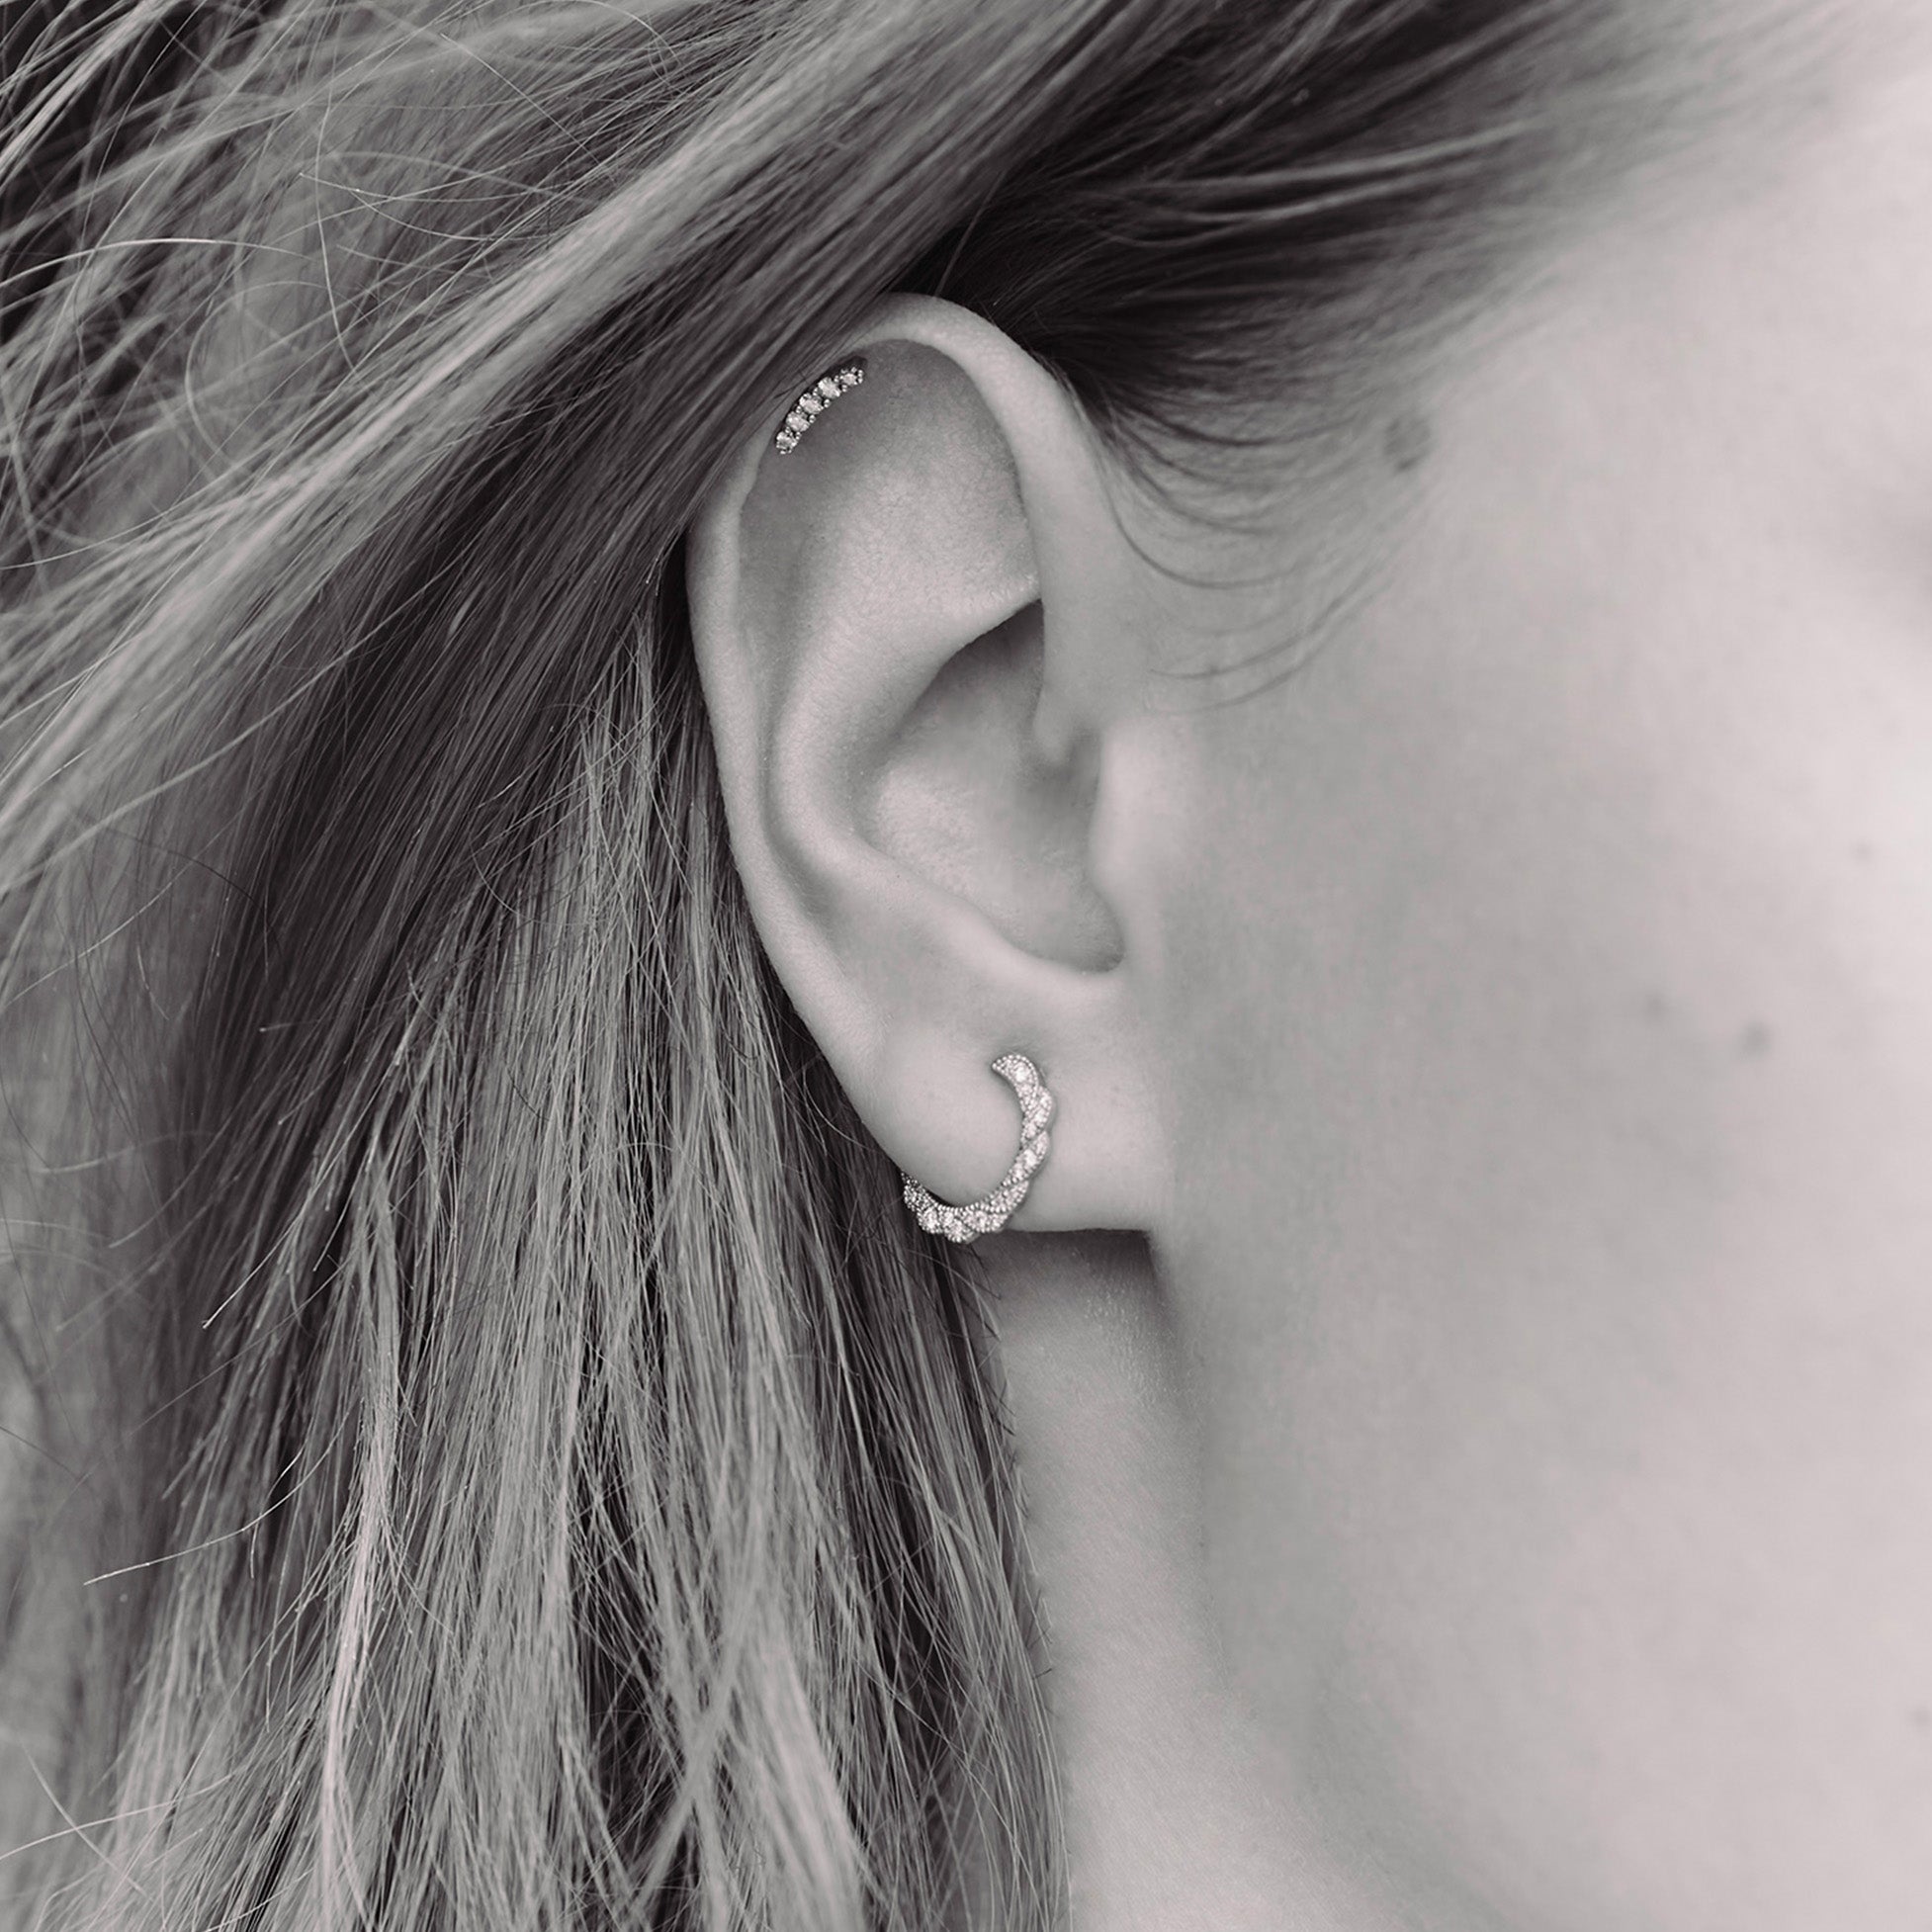 Single earring - Ama